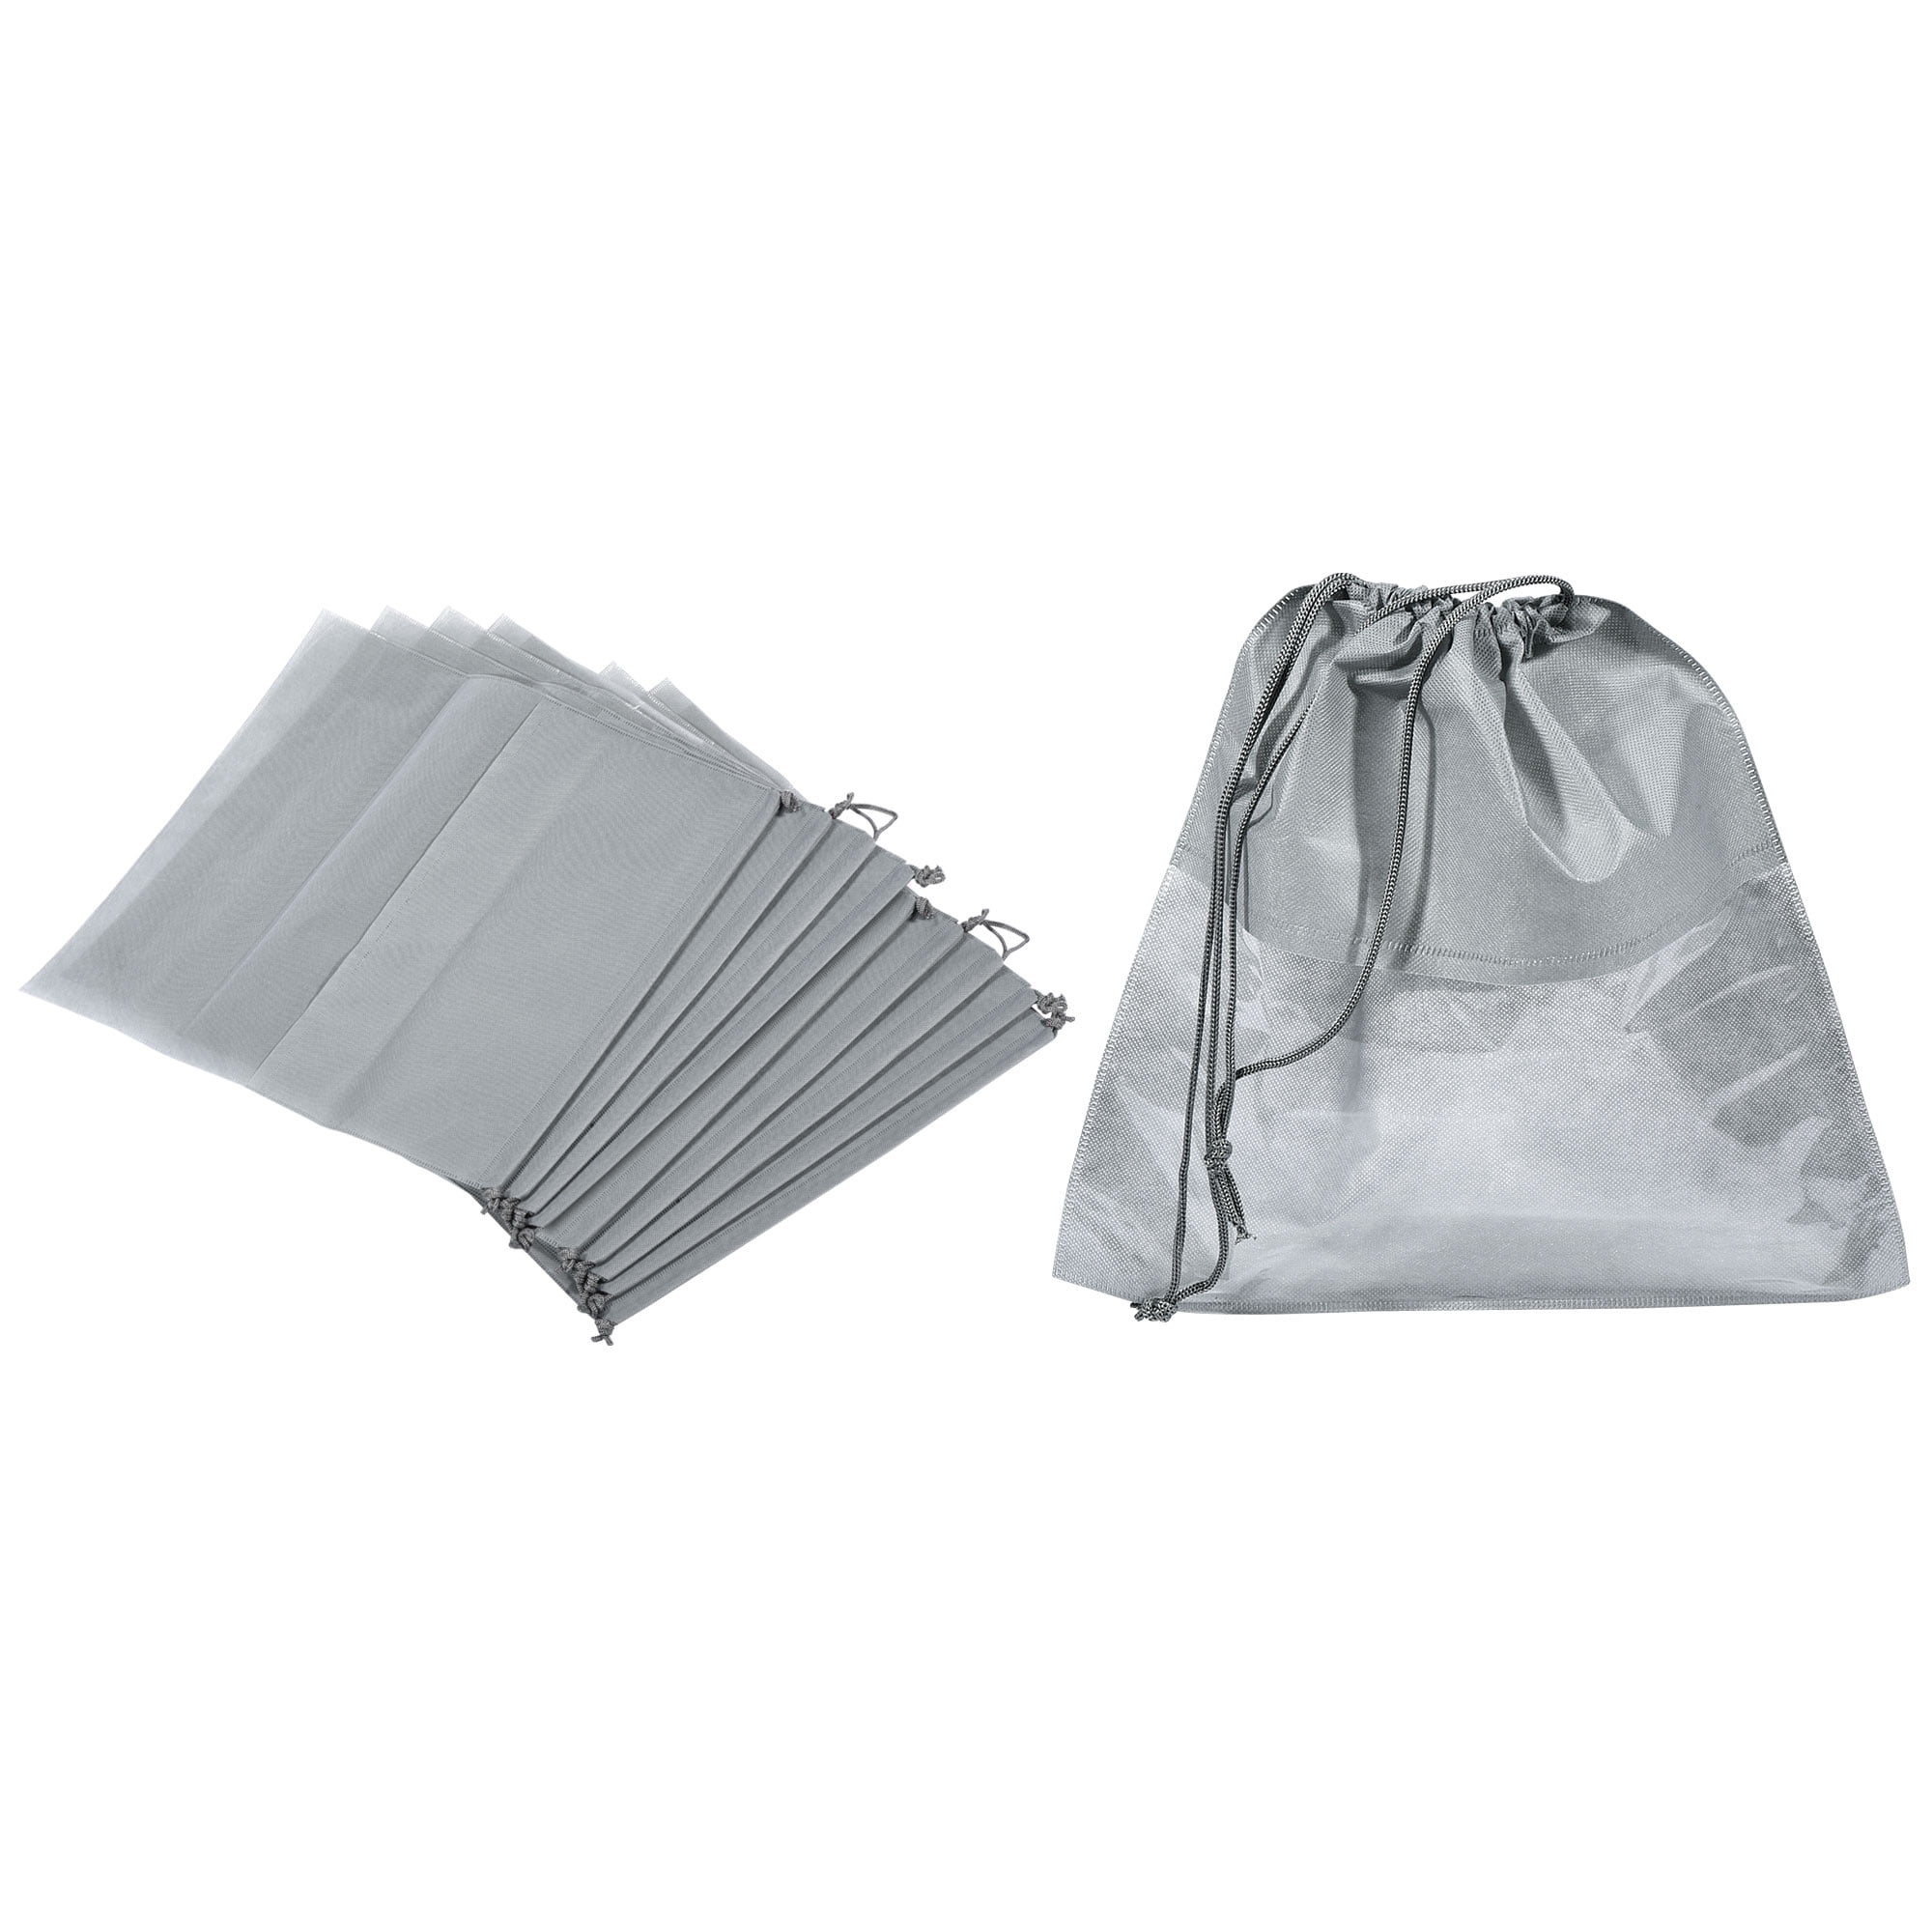 Uxcell 17 7 Inch Non Woven Fabric Handbag Dust Cover Drawstring Bag for Handbags Purses Gray 10 Pack 336cc4e7 66e3 41cc a172 c426d51971c0.96f9281eab7159a832168ad386362f69